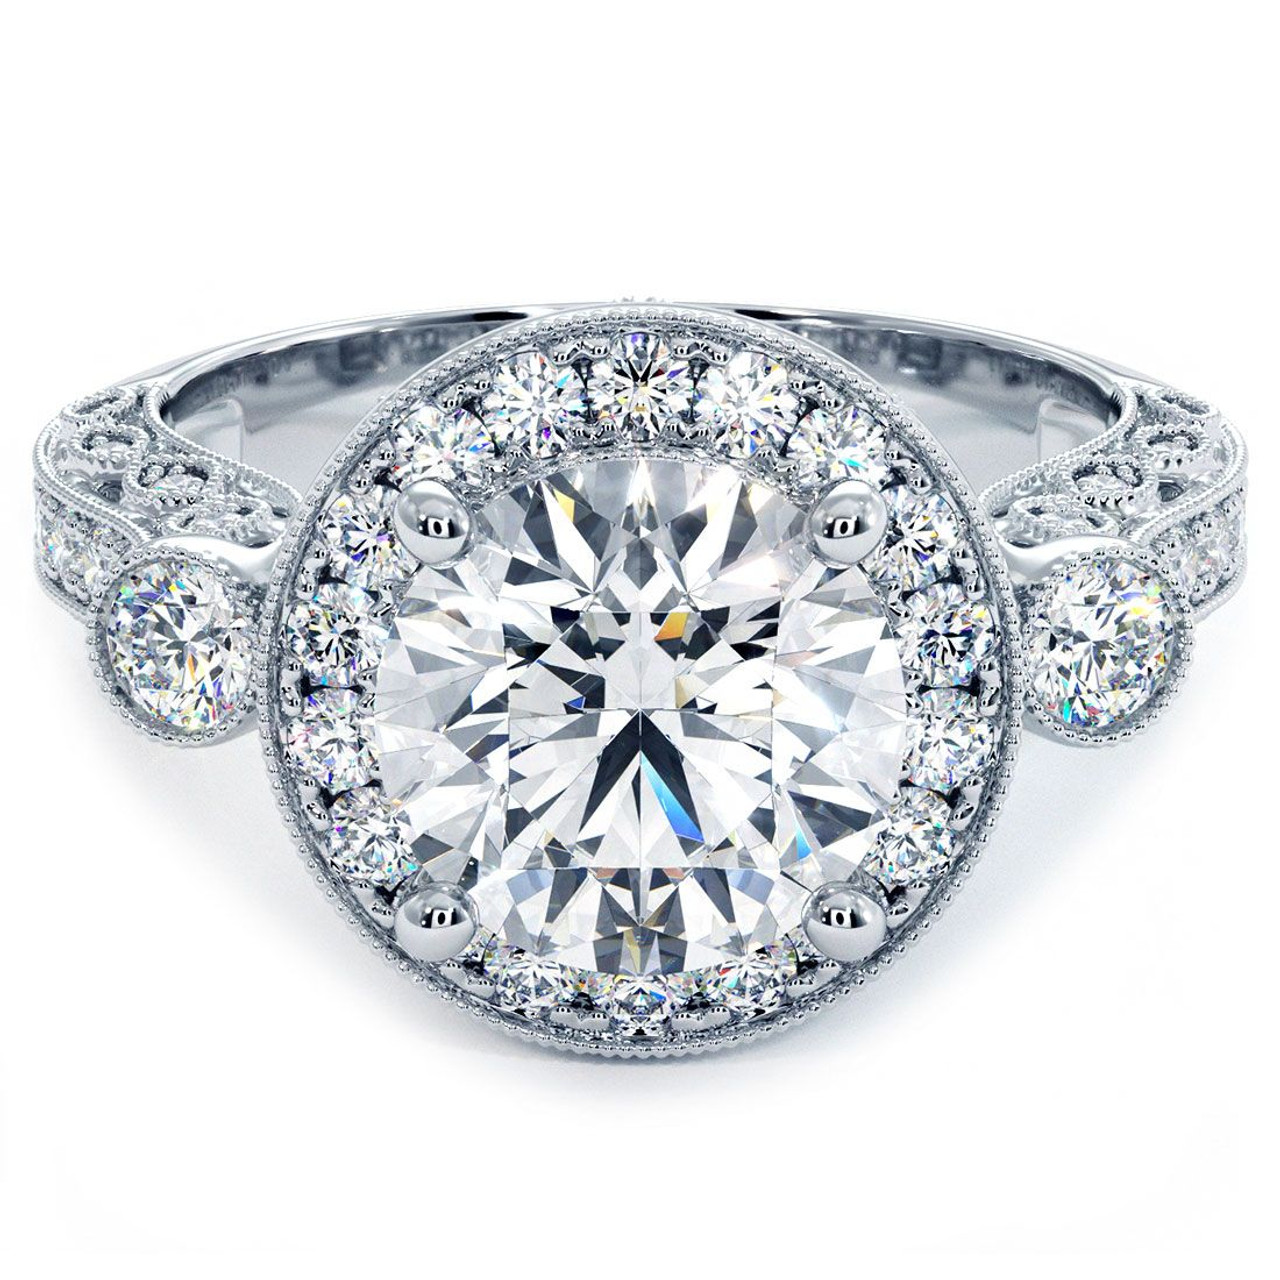 Antique Filigree Asscher Cut Diamond Ring With Emerald In White Gold |  Fascinating Diamonds